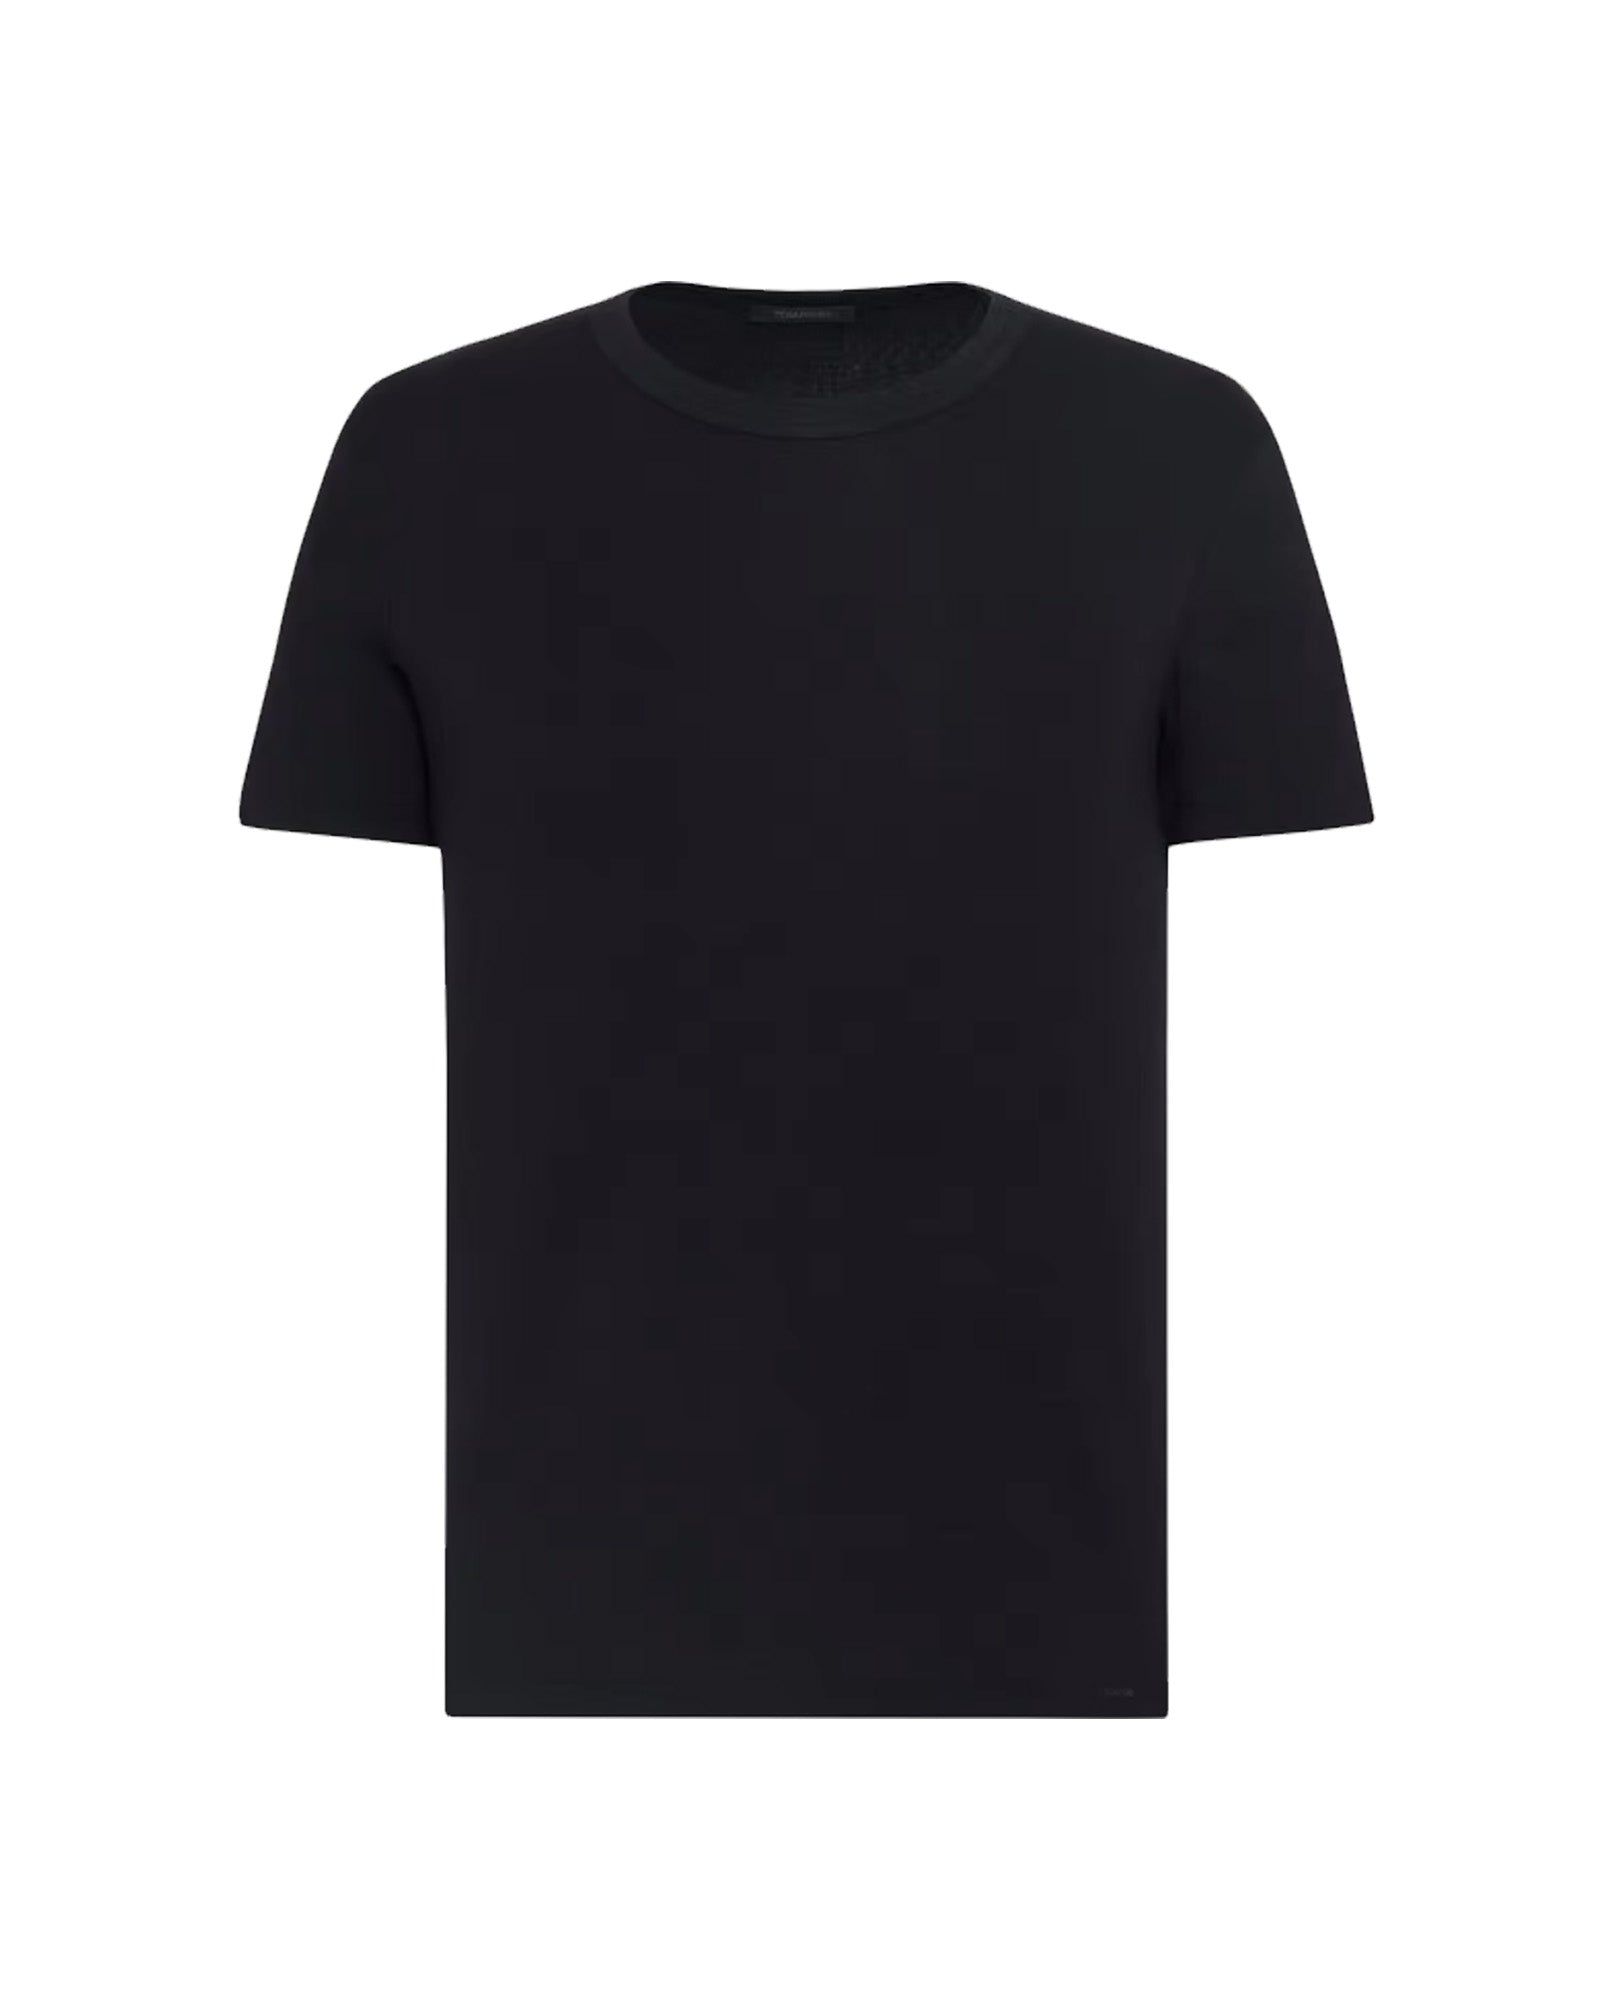 T-Shirt MC Premium - RM